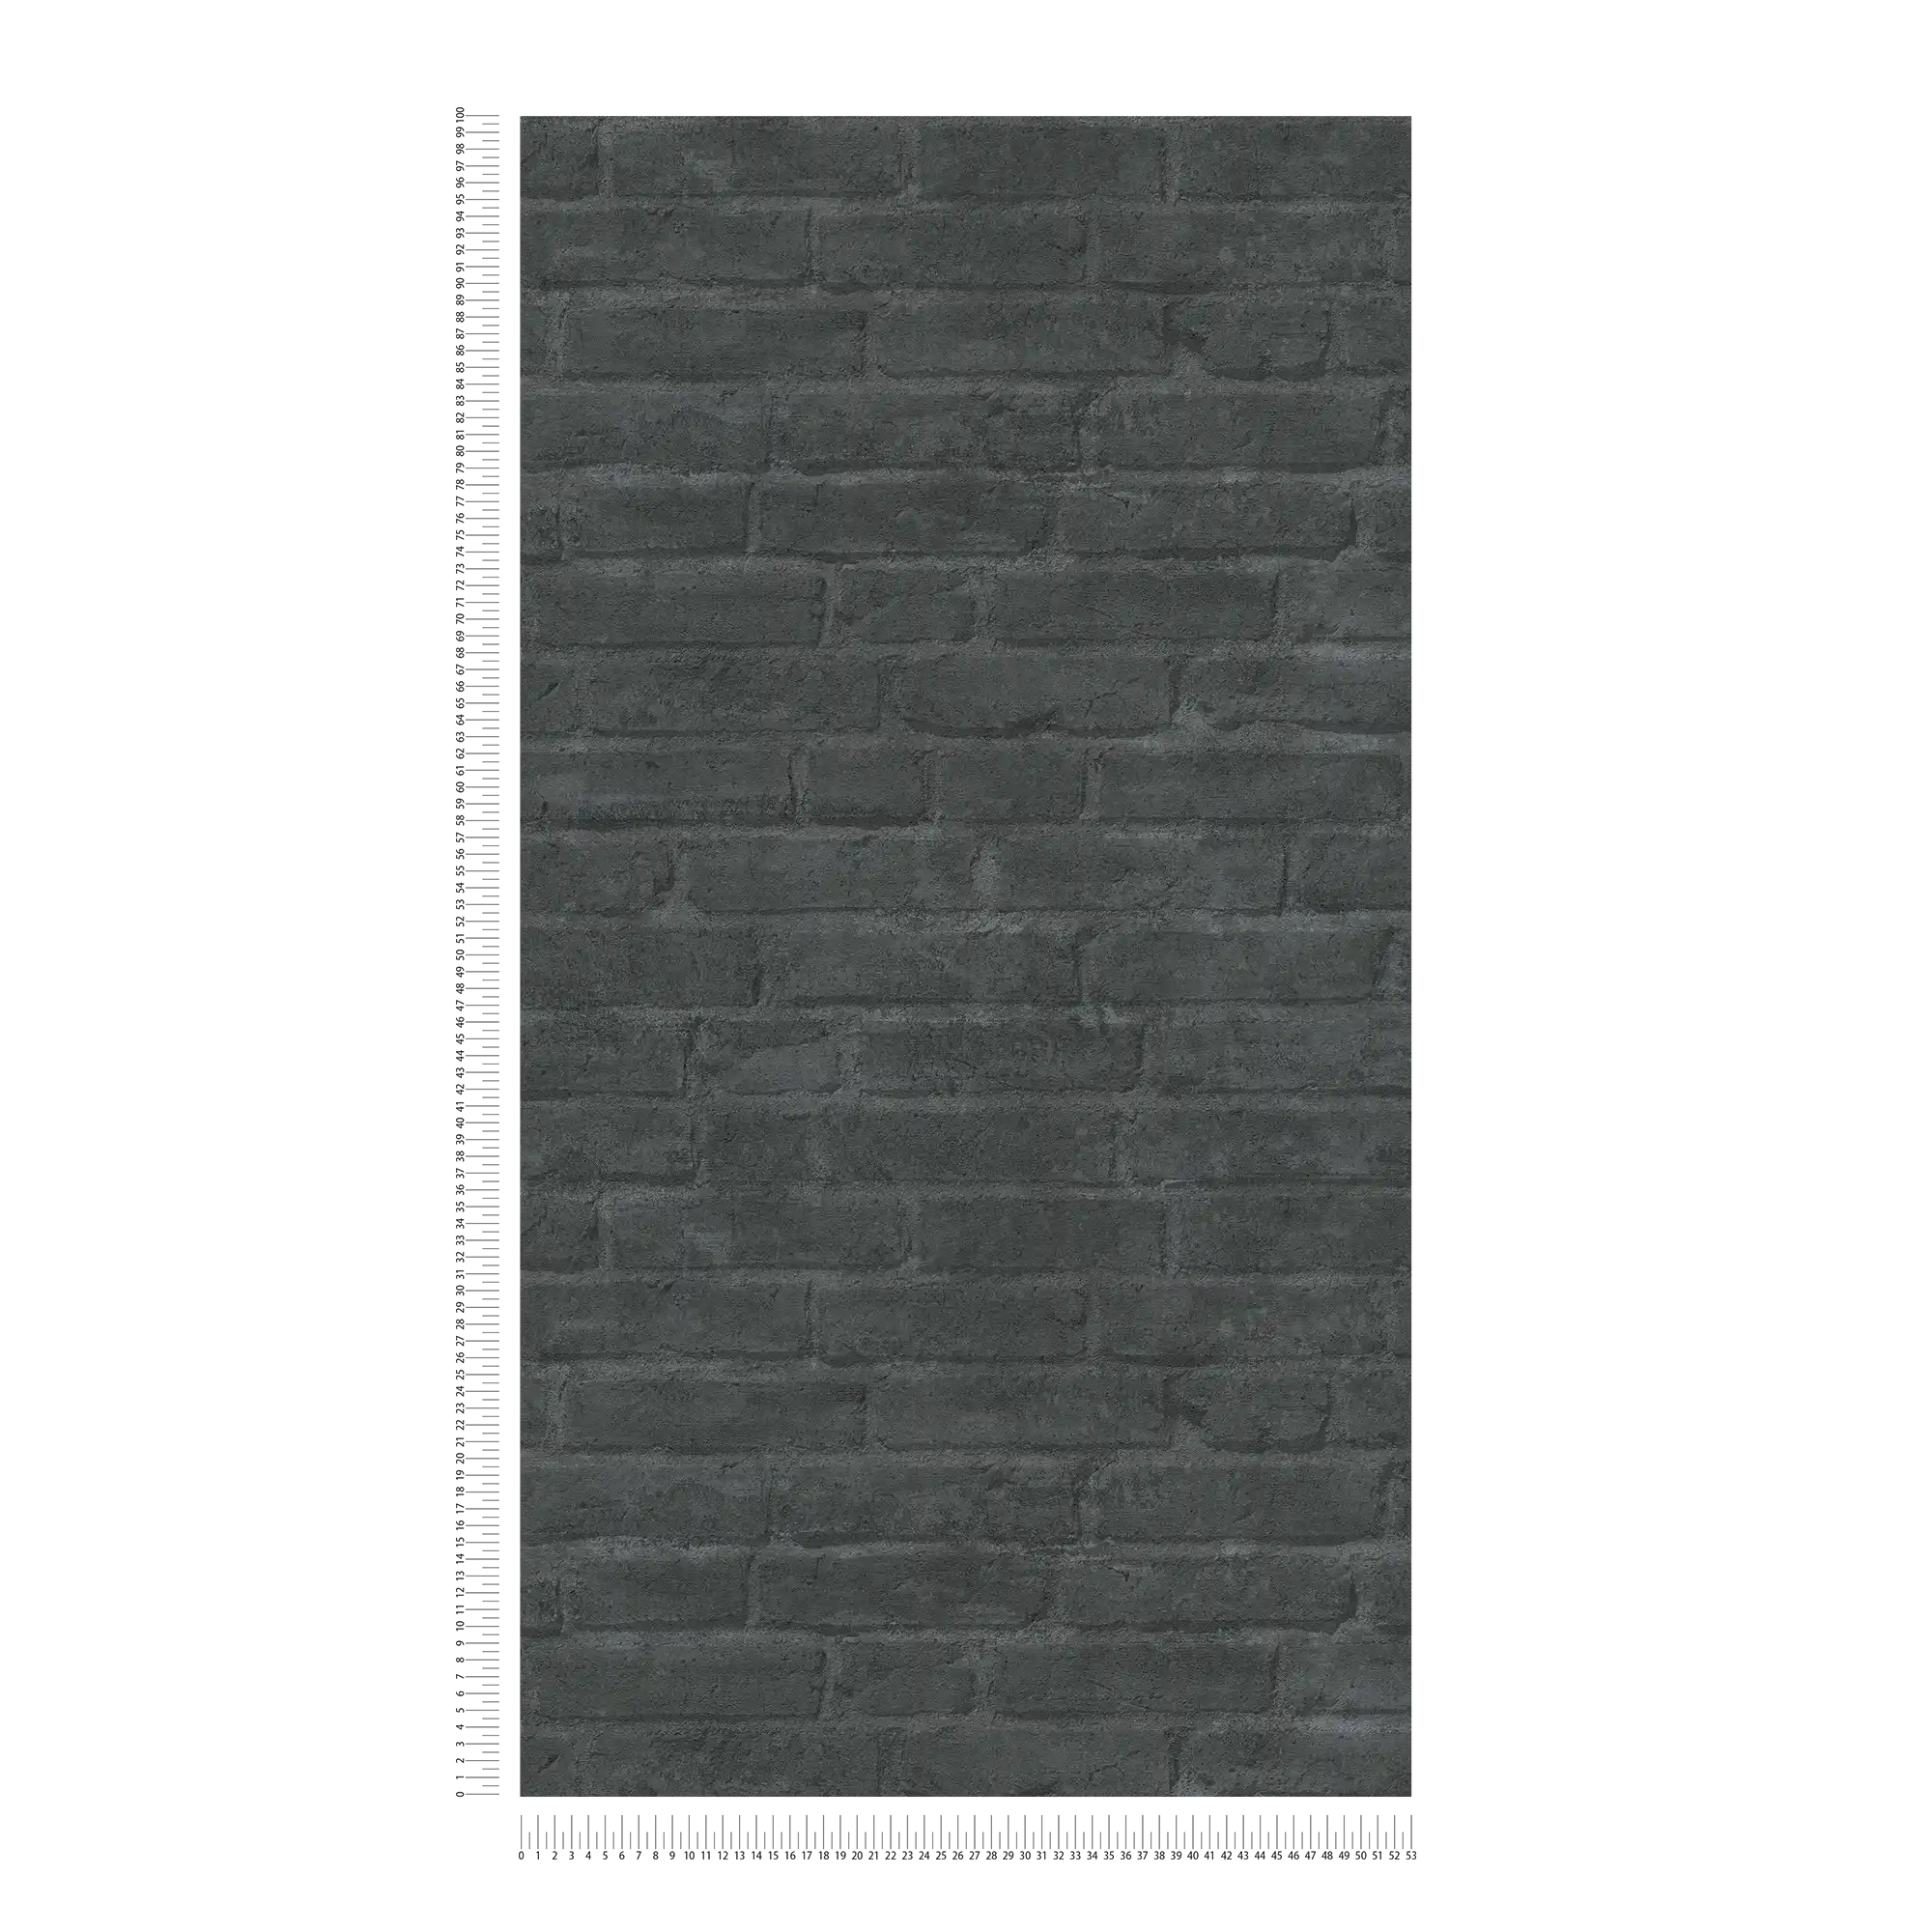             Anthracite stone wallpaper brick wall design - grey, black, anthracite
        